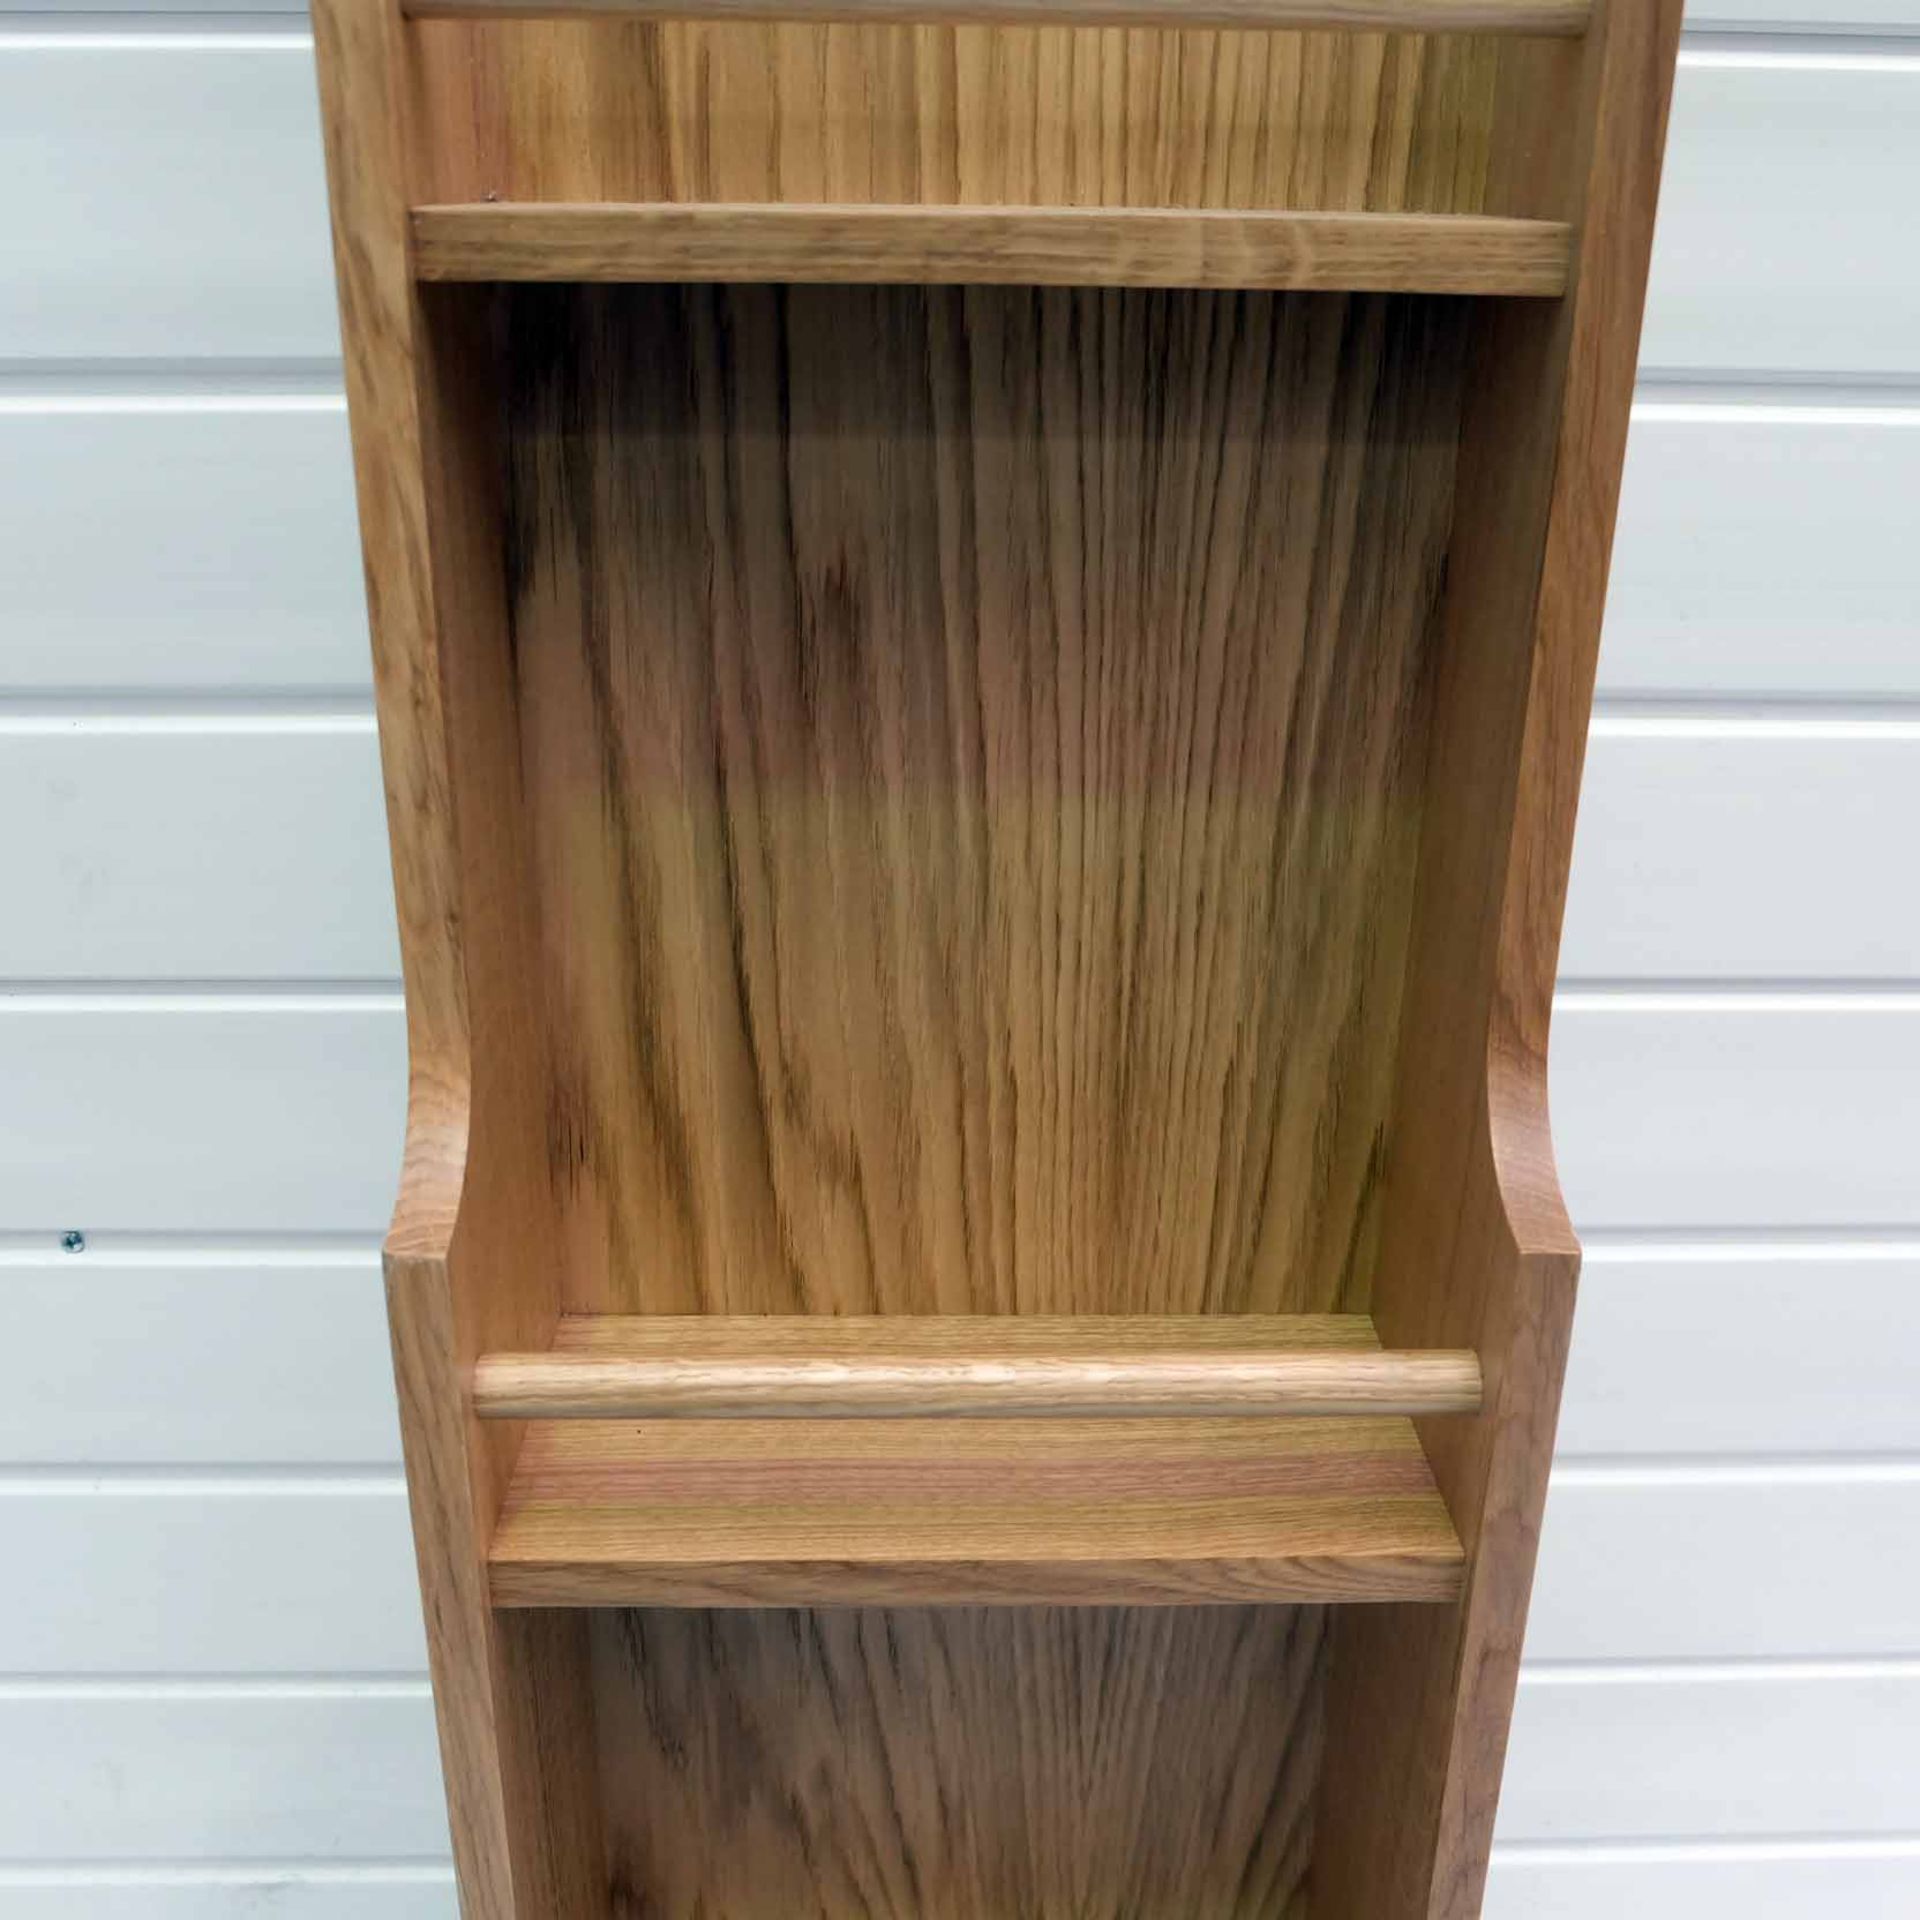 Solid Wood Spice Rack. Size 280mm W x 130mm D x 900mm H. 3 x Shelves. - Image 4 of 5